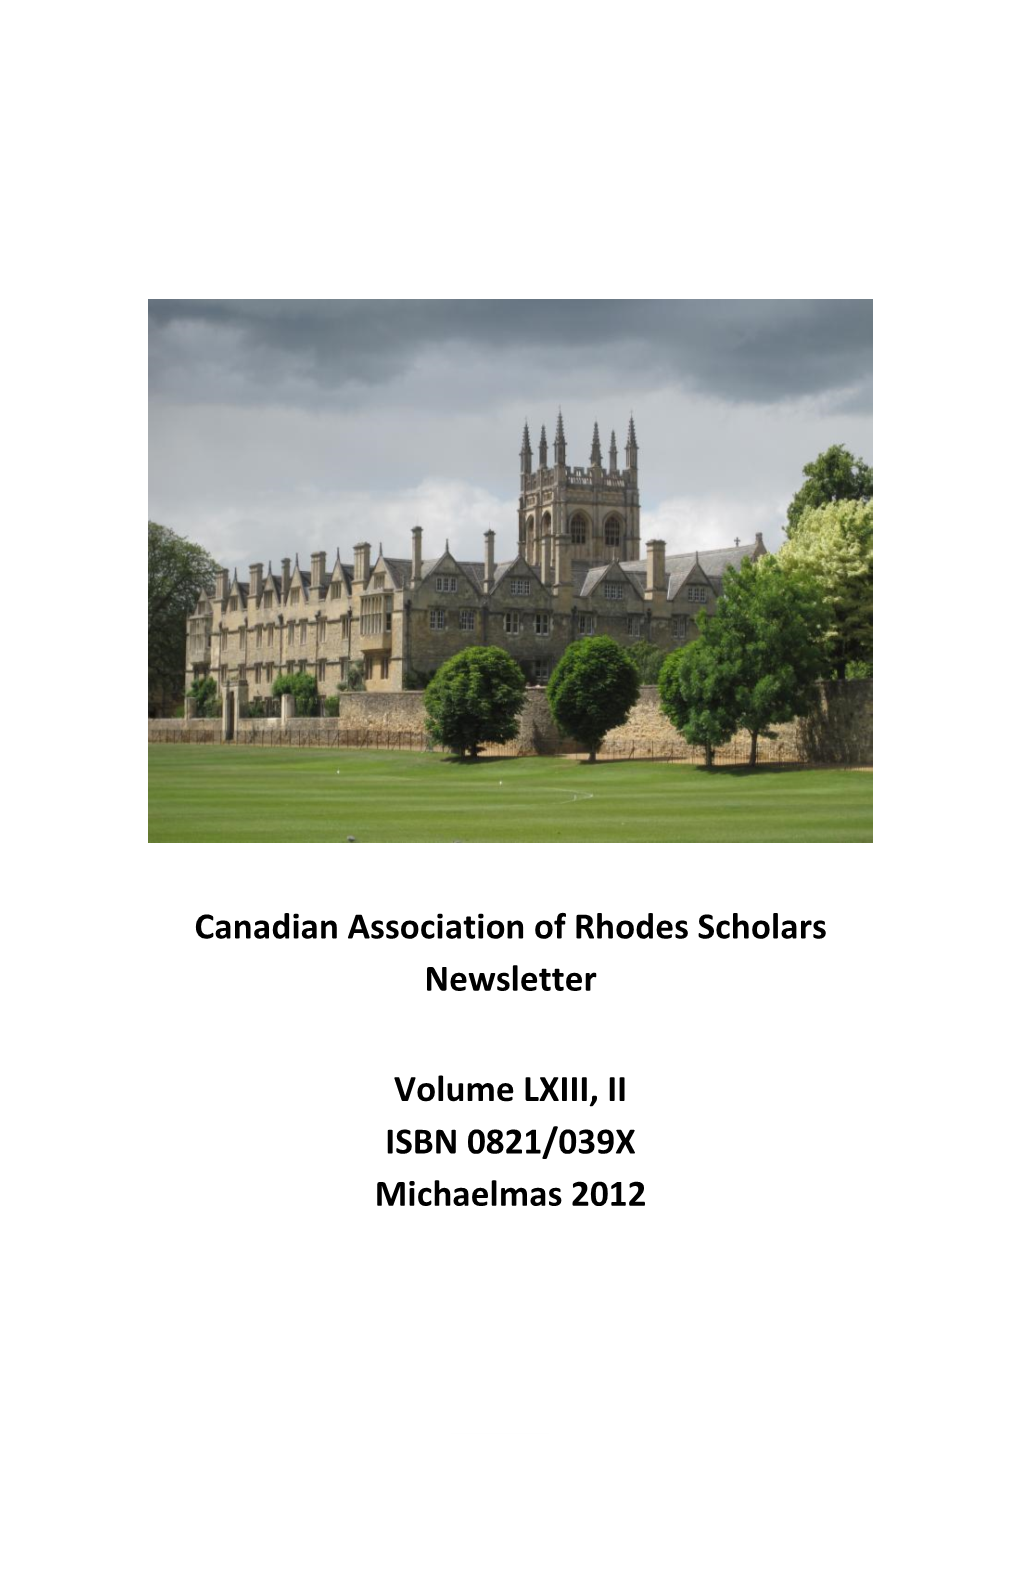 Canadian Association of Rhodes Scholars Newsletter Volume LXIII, II